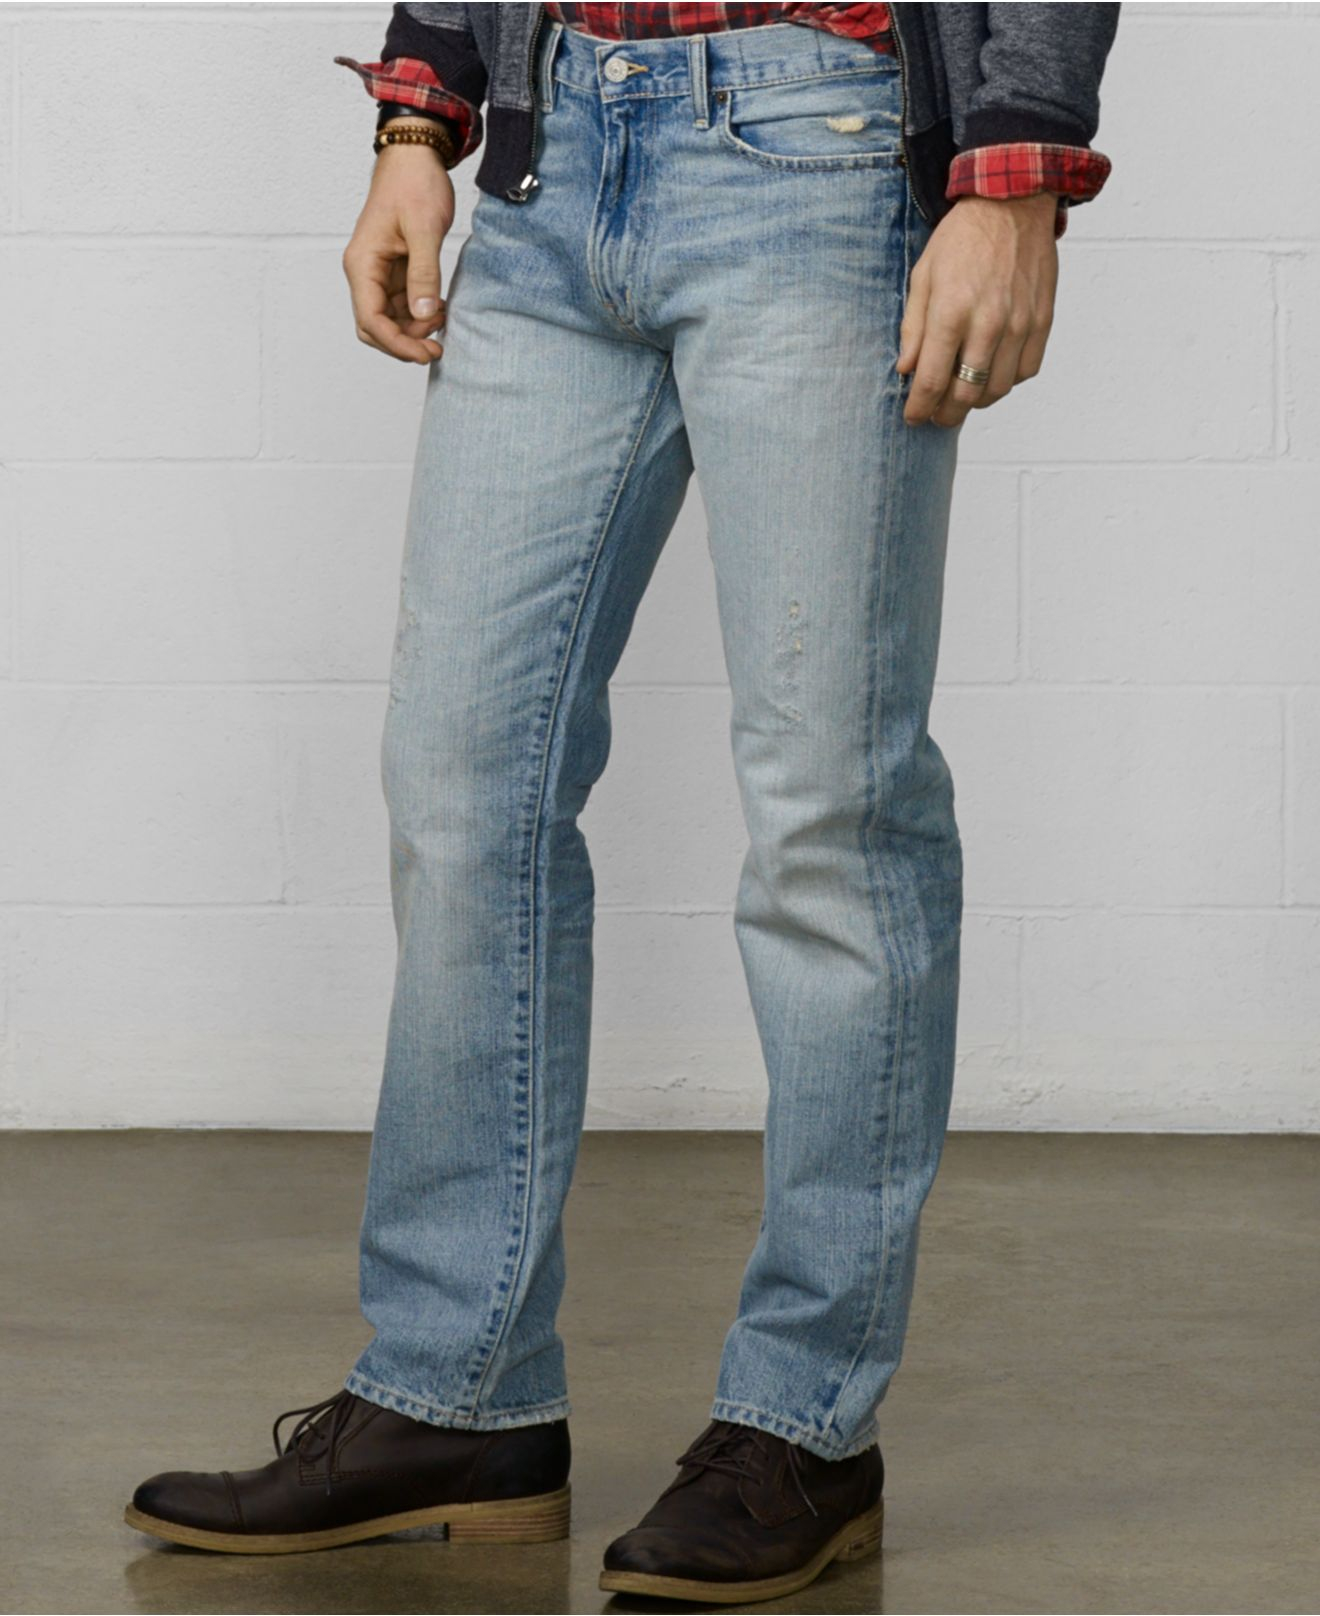 Denim & Supply Ralph Lauren Boot Cut Jeans in Blue for Men - Lyst